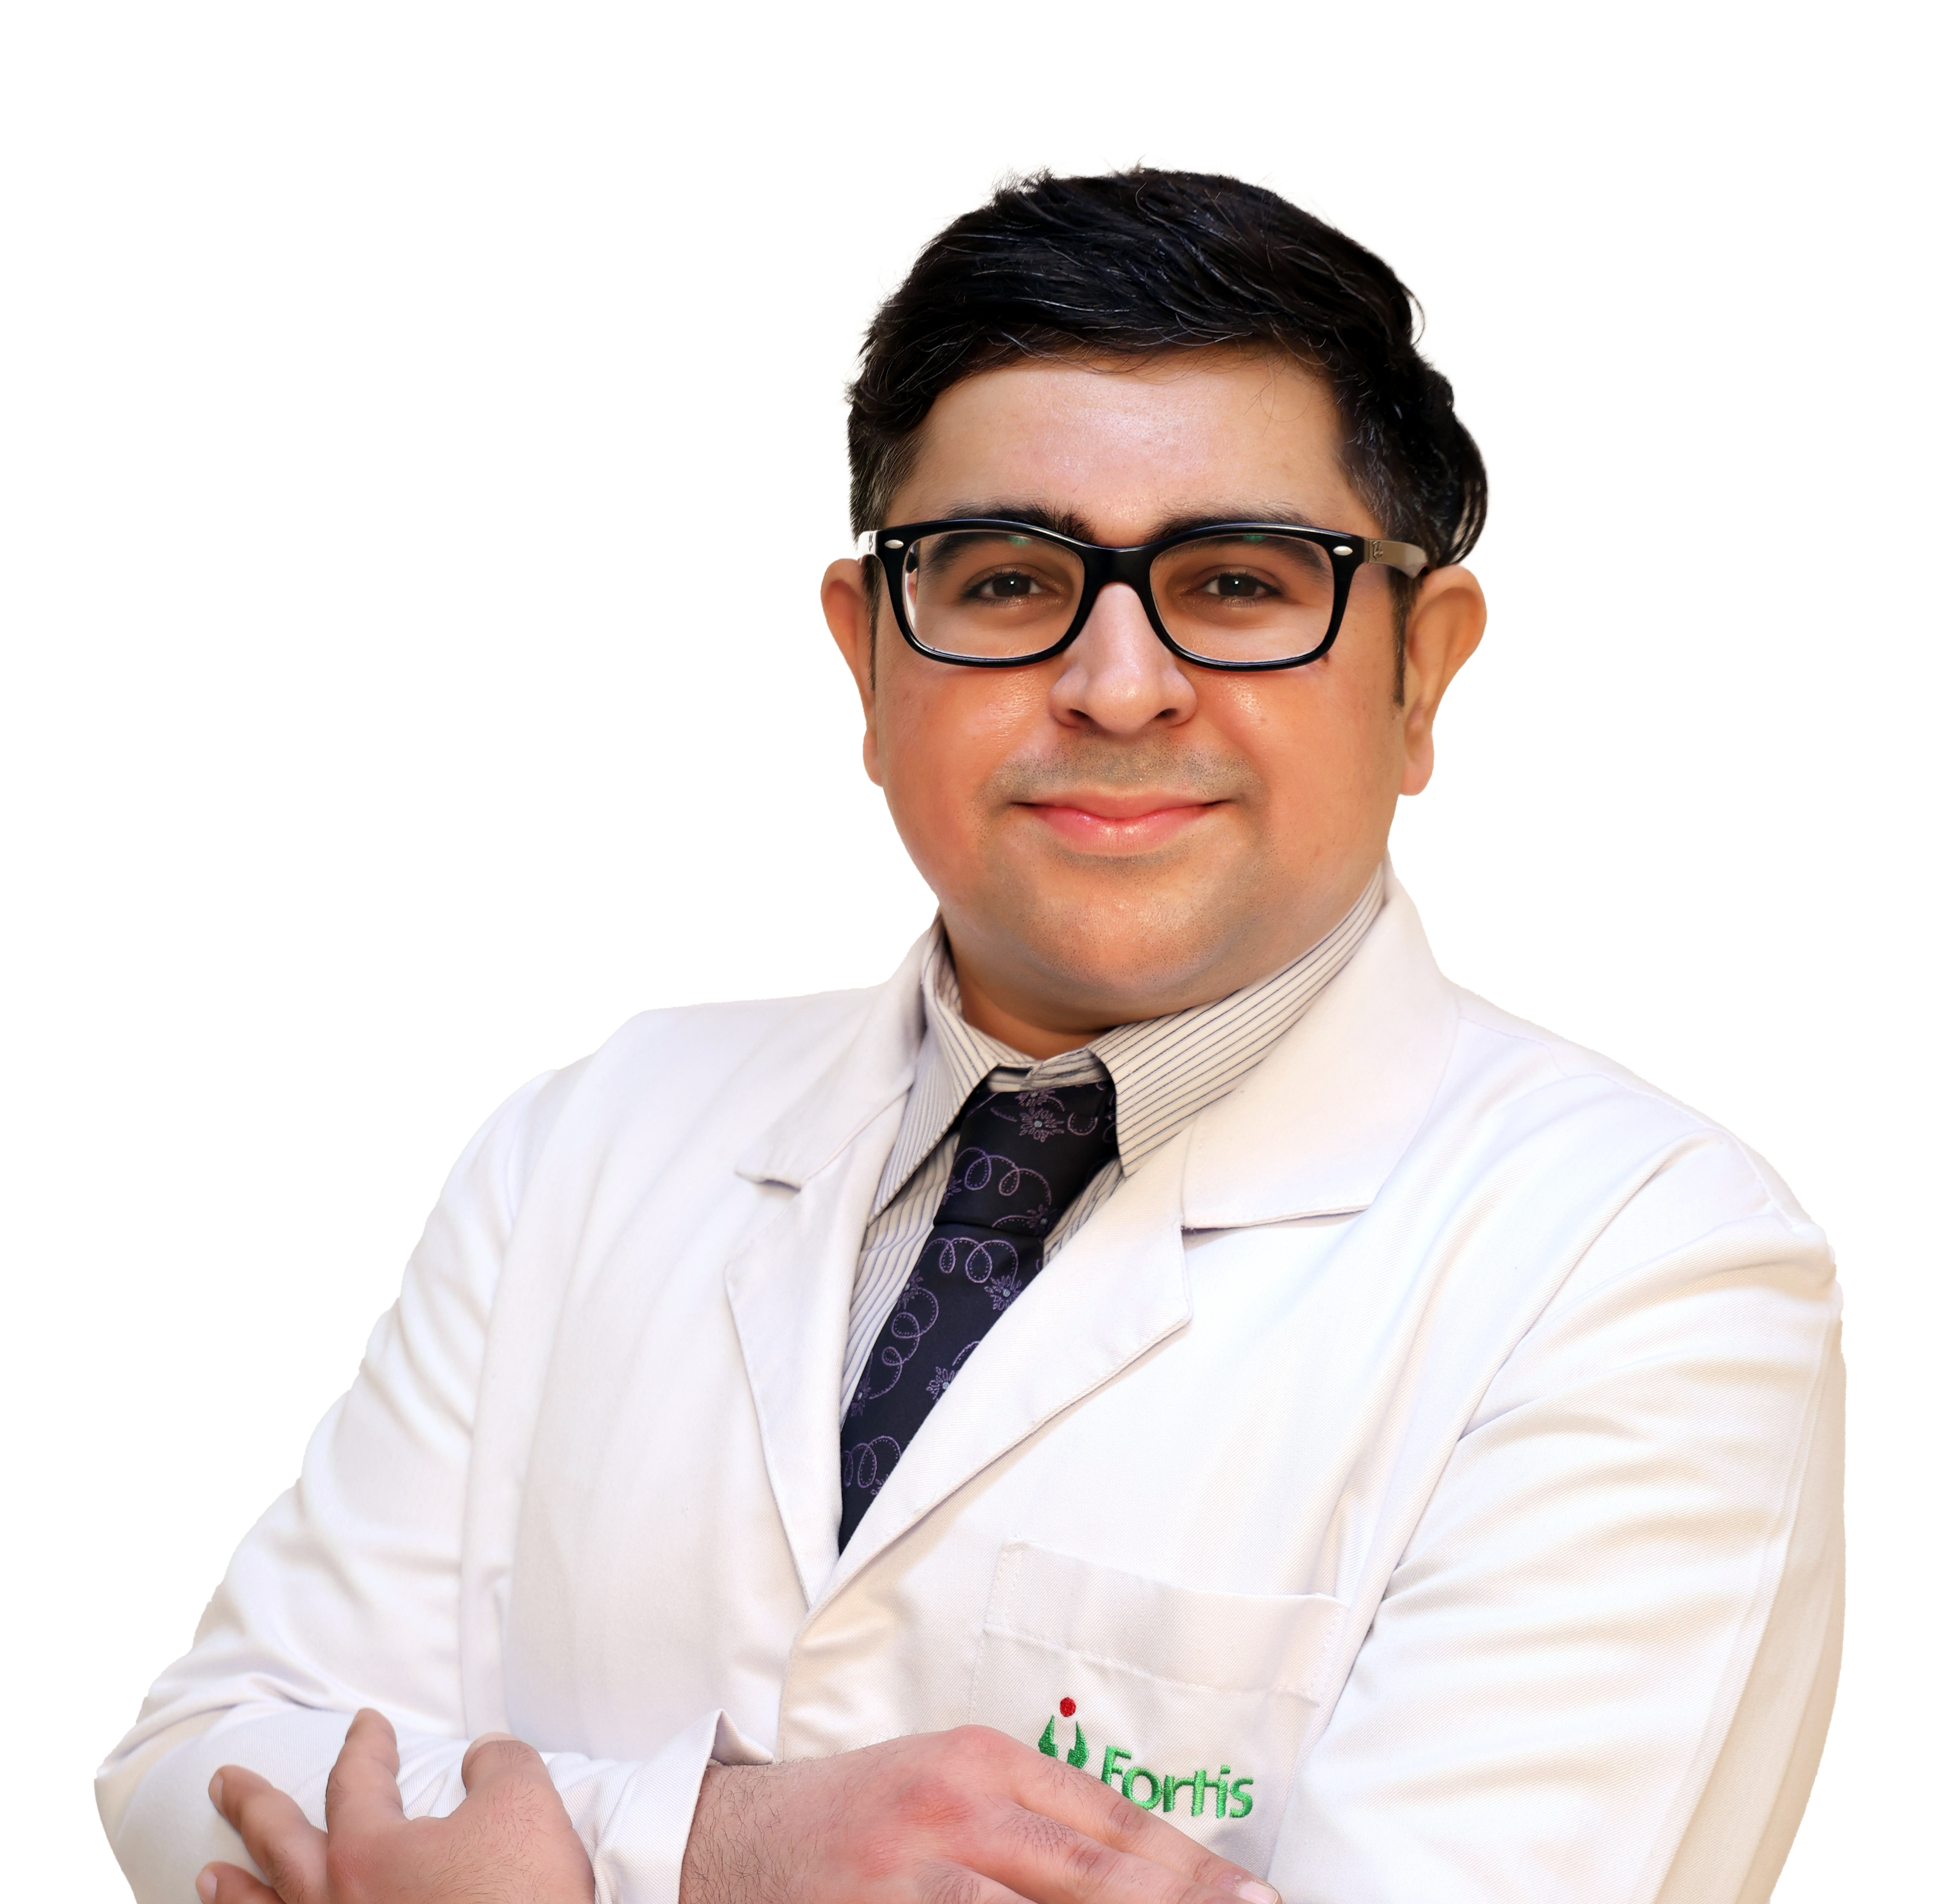 Dr. Manit Arora